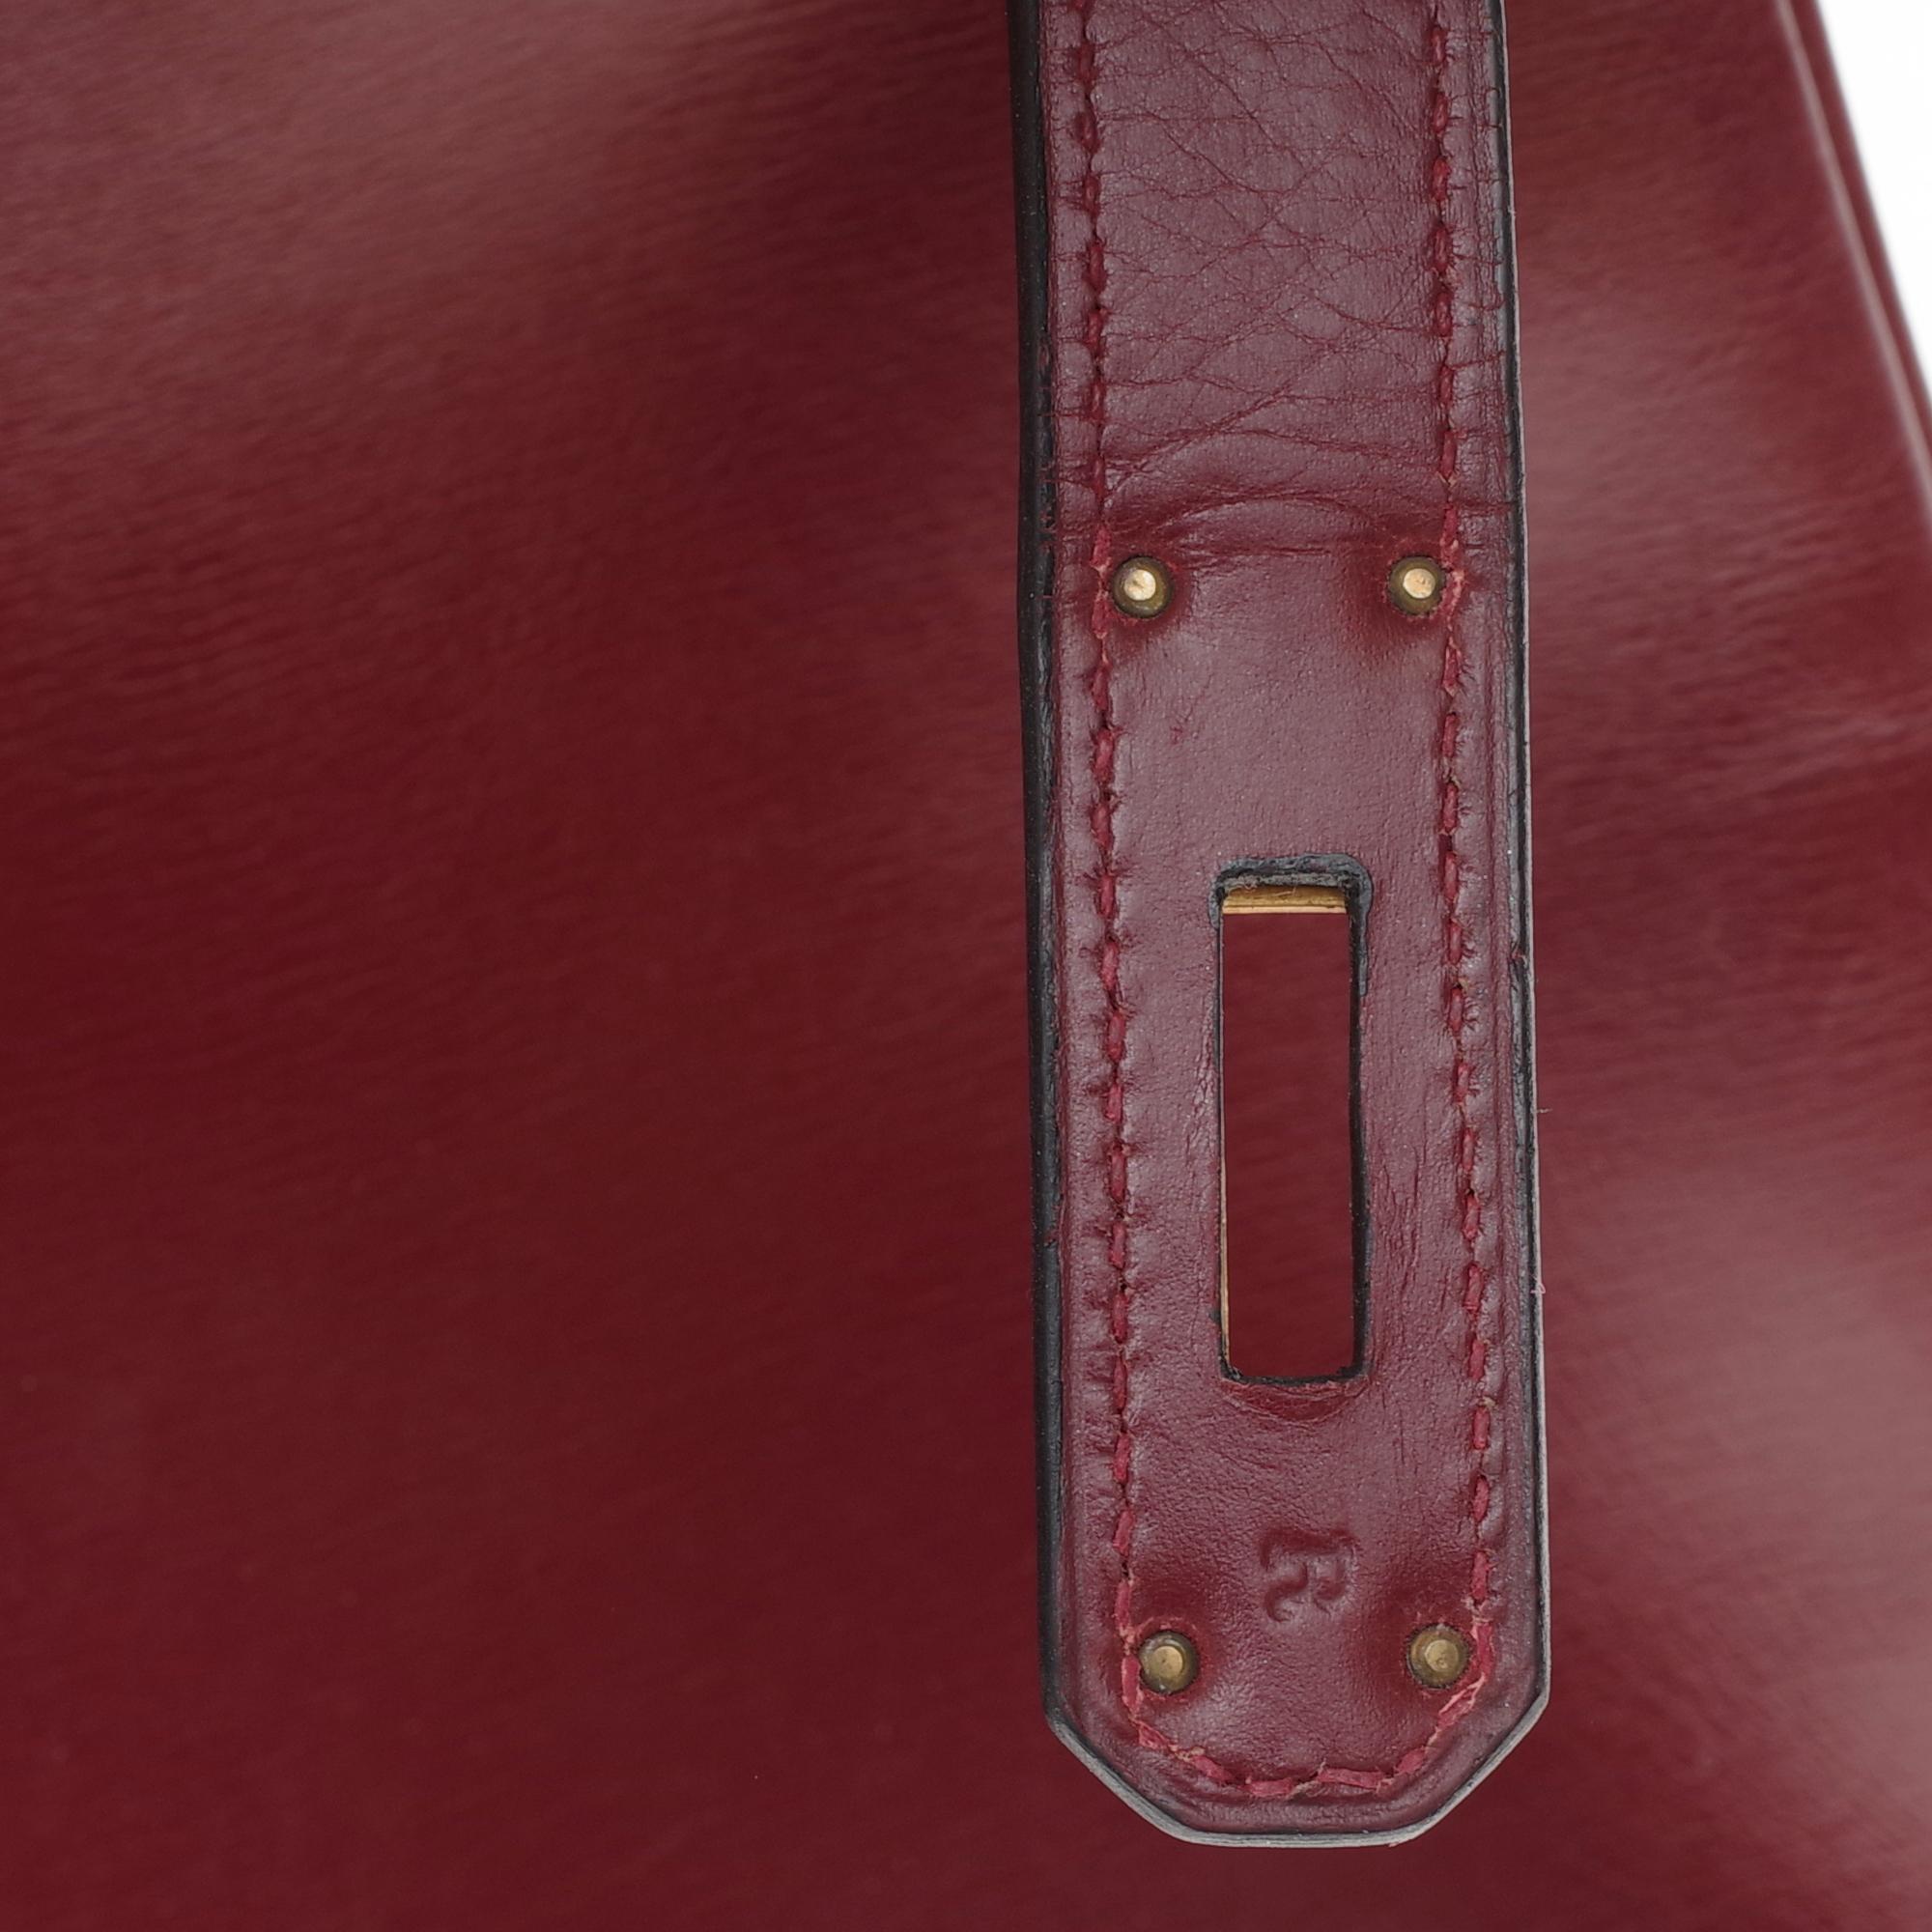 Hermès Kelly 28cm retourné handbag in burgundy calfskin Gold hardware 1